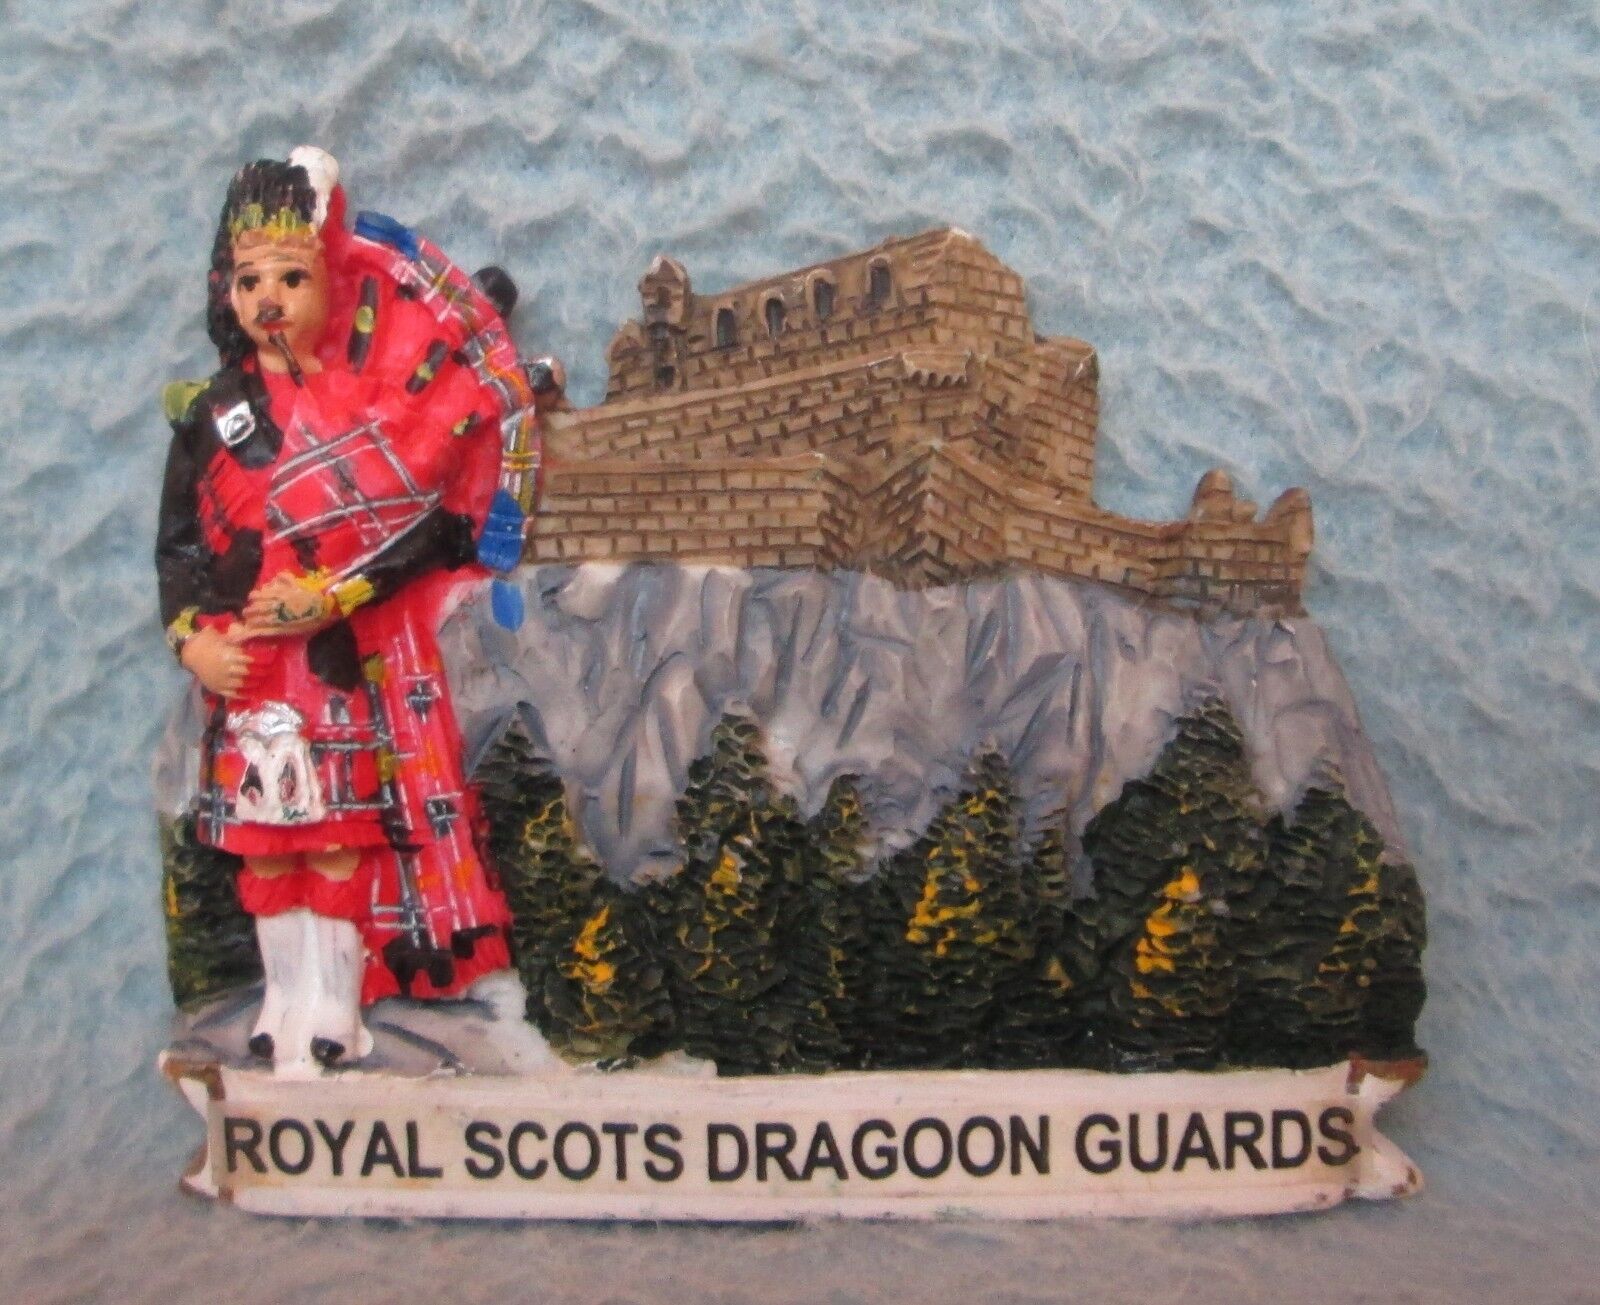 Royal Scots Dragoon Guards British Army 3D Magnet Travel Souvenir Refrigerator